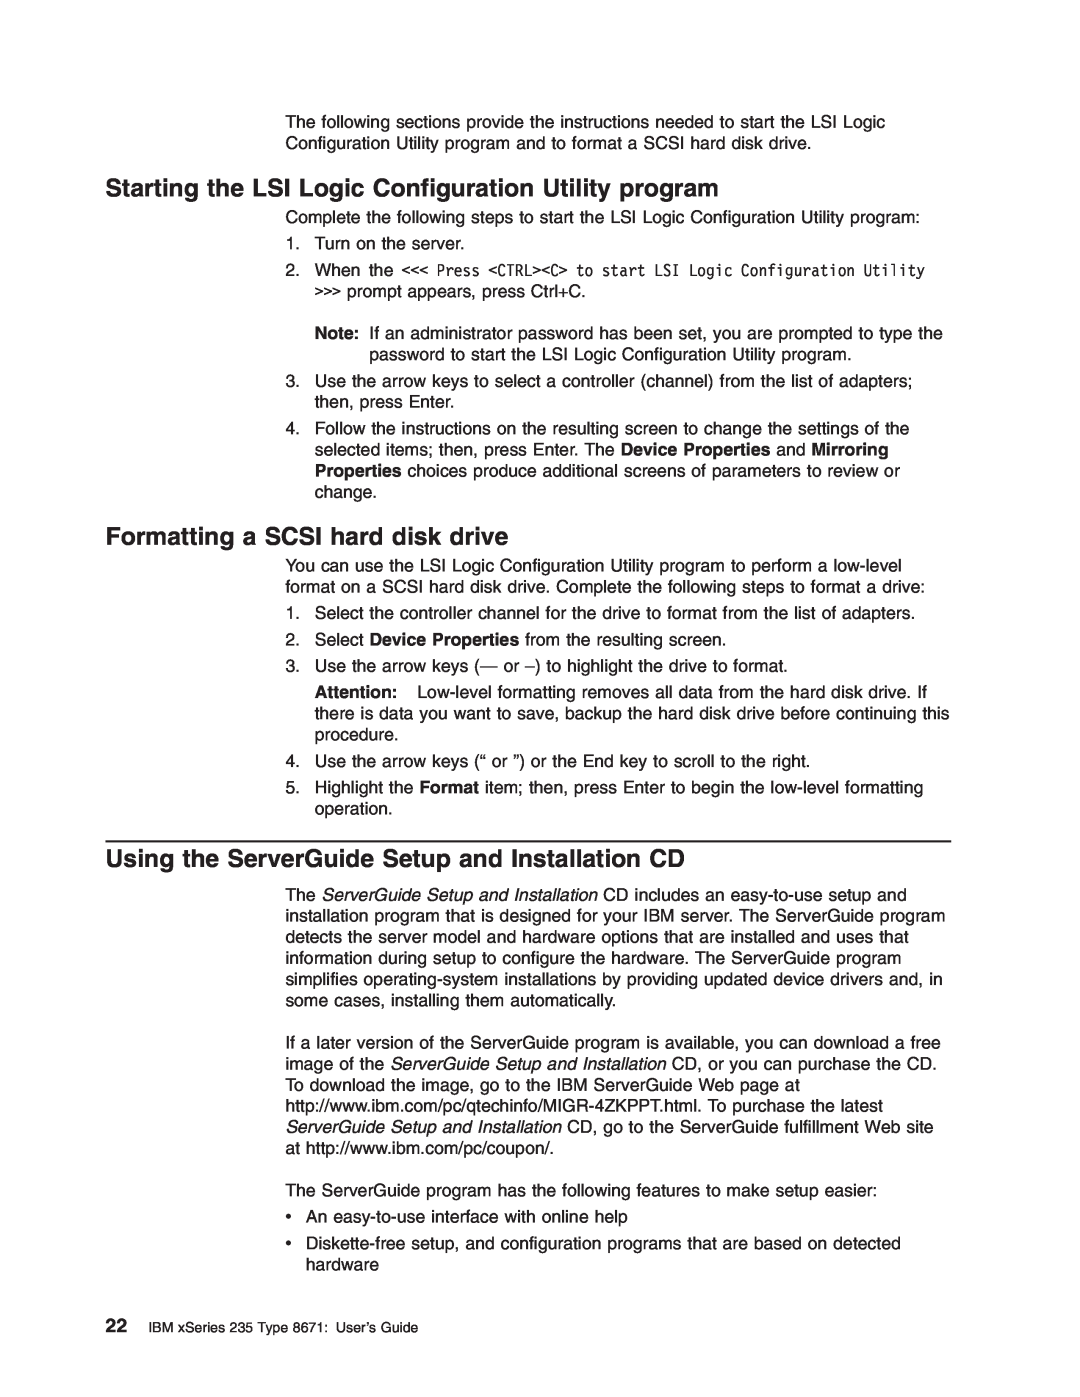 IBM xSeries 235 manual Starting the LSI Logic Configuration Utility program, Formatting a SCSI hard disk drive 